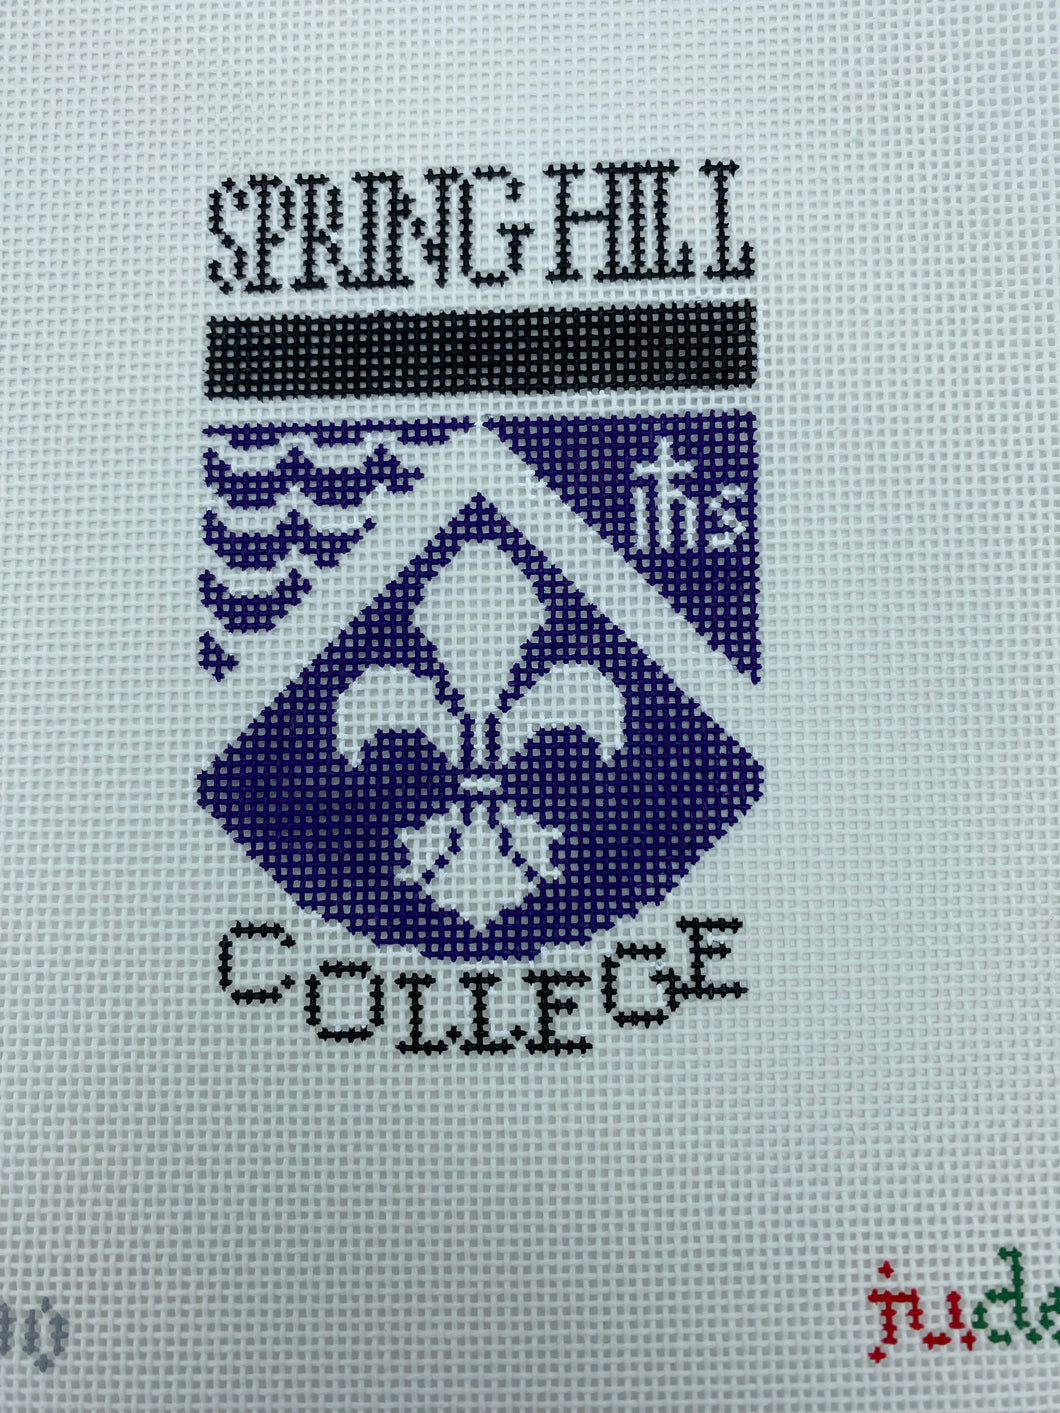 Springhill College